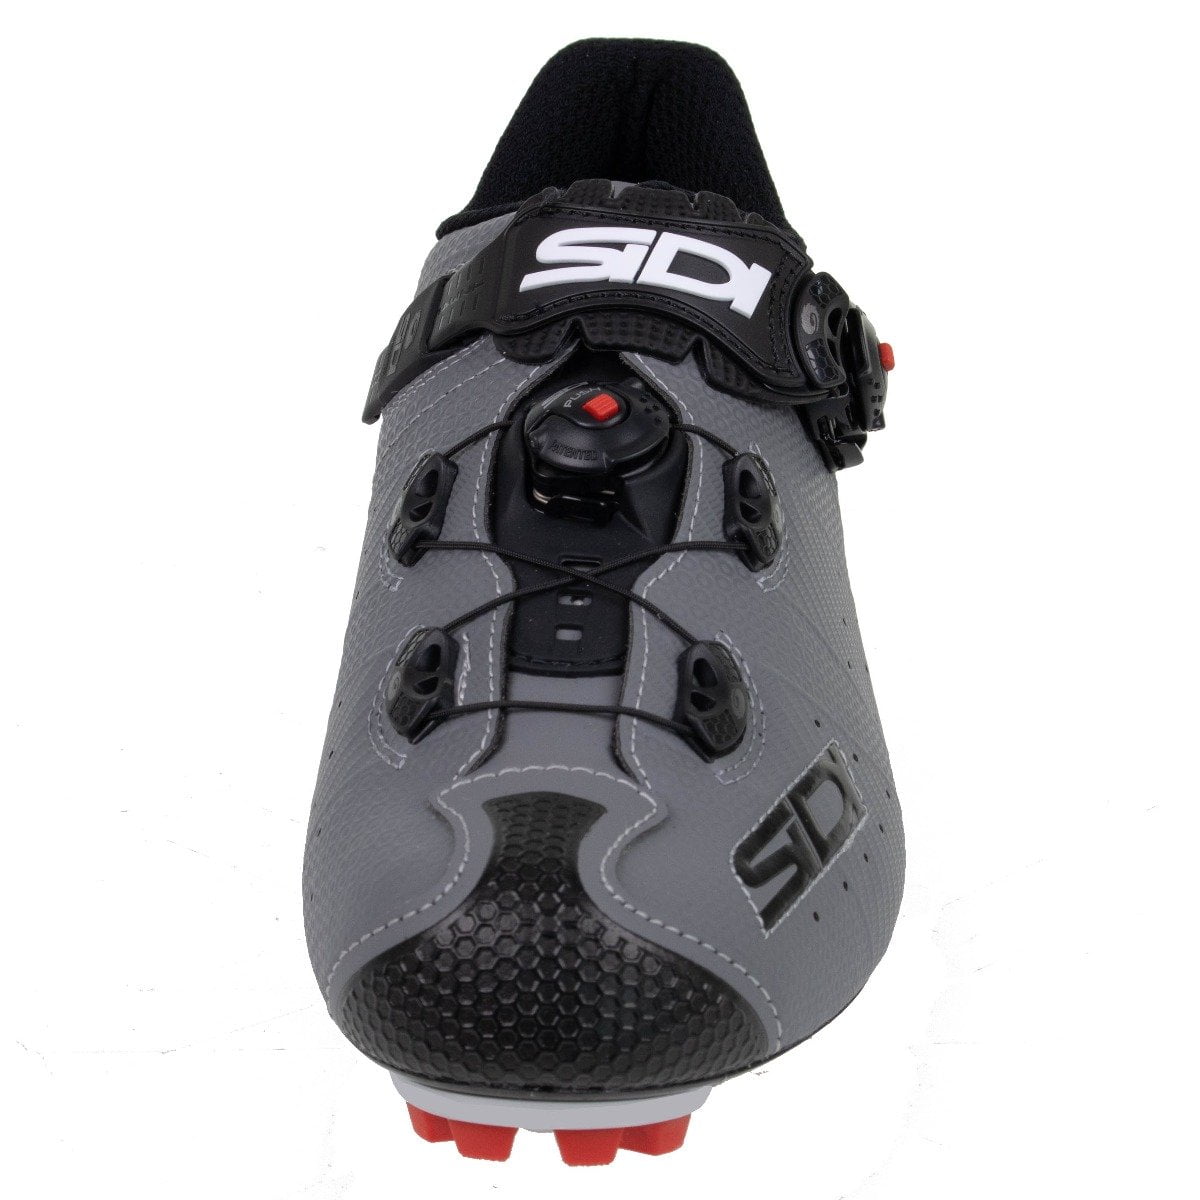 SIDI Drako 2 SRS MTB Cycling Shoes Bike Shoes Matt Grey/Black Size 40-46 EUR 